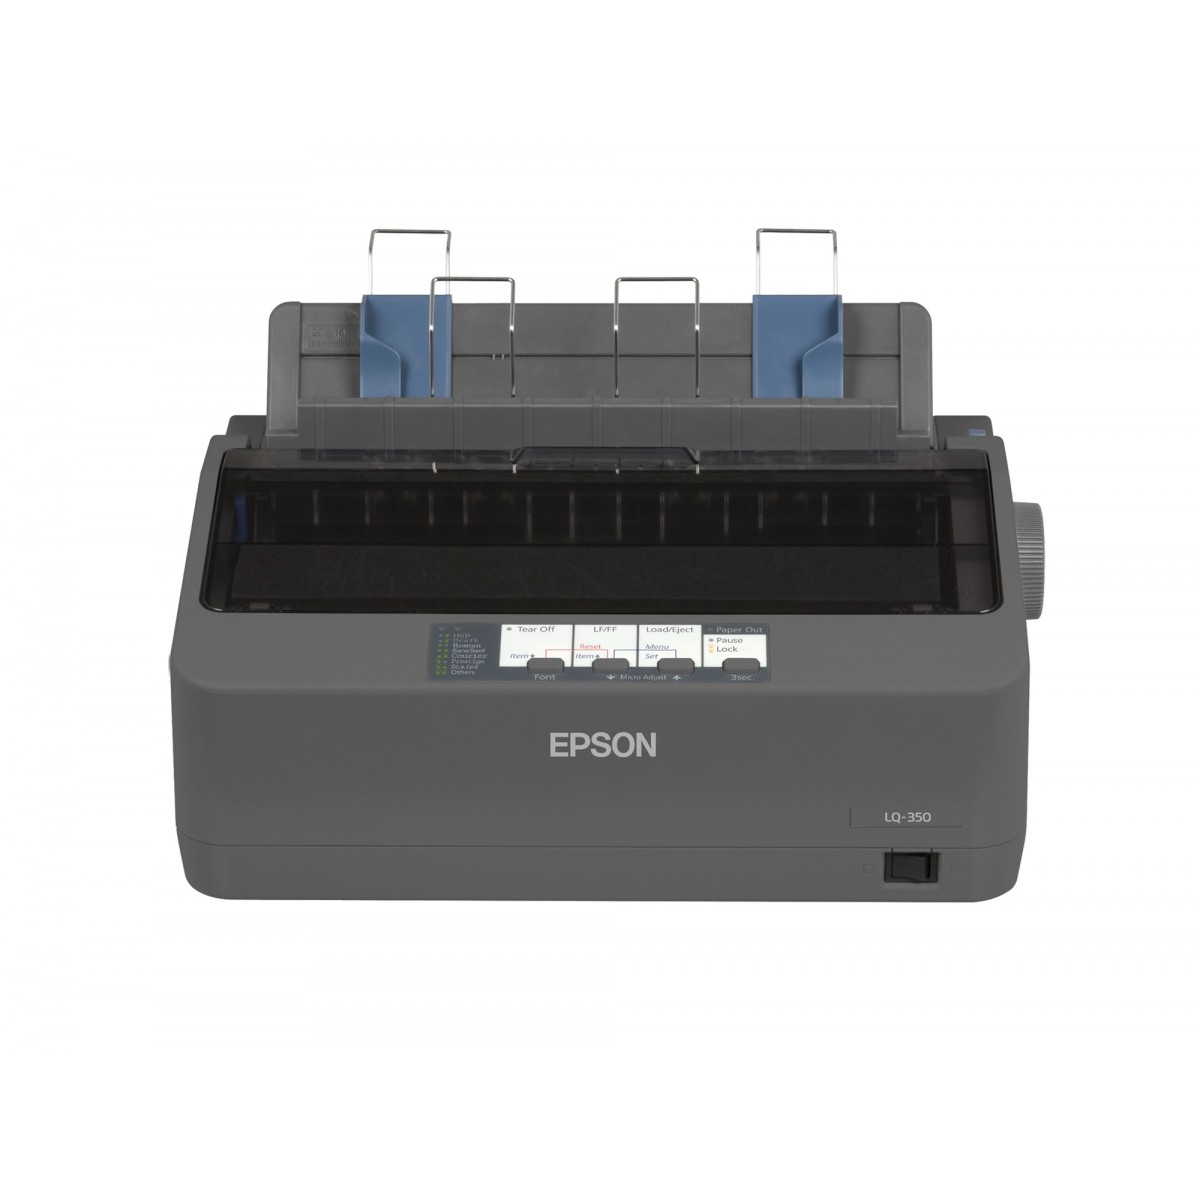 Epson LQ-350 - Printer b/w Dot Matrix - 360 dpi - 5.78 ppm